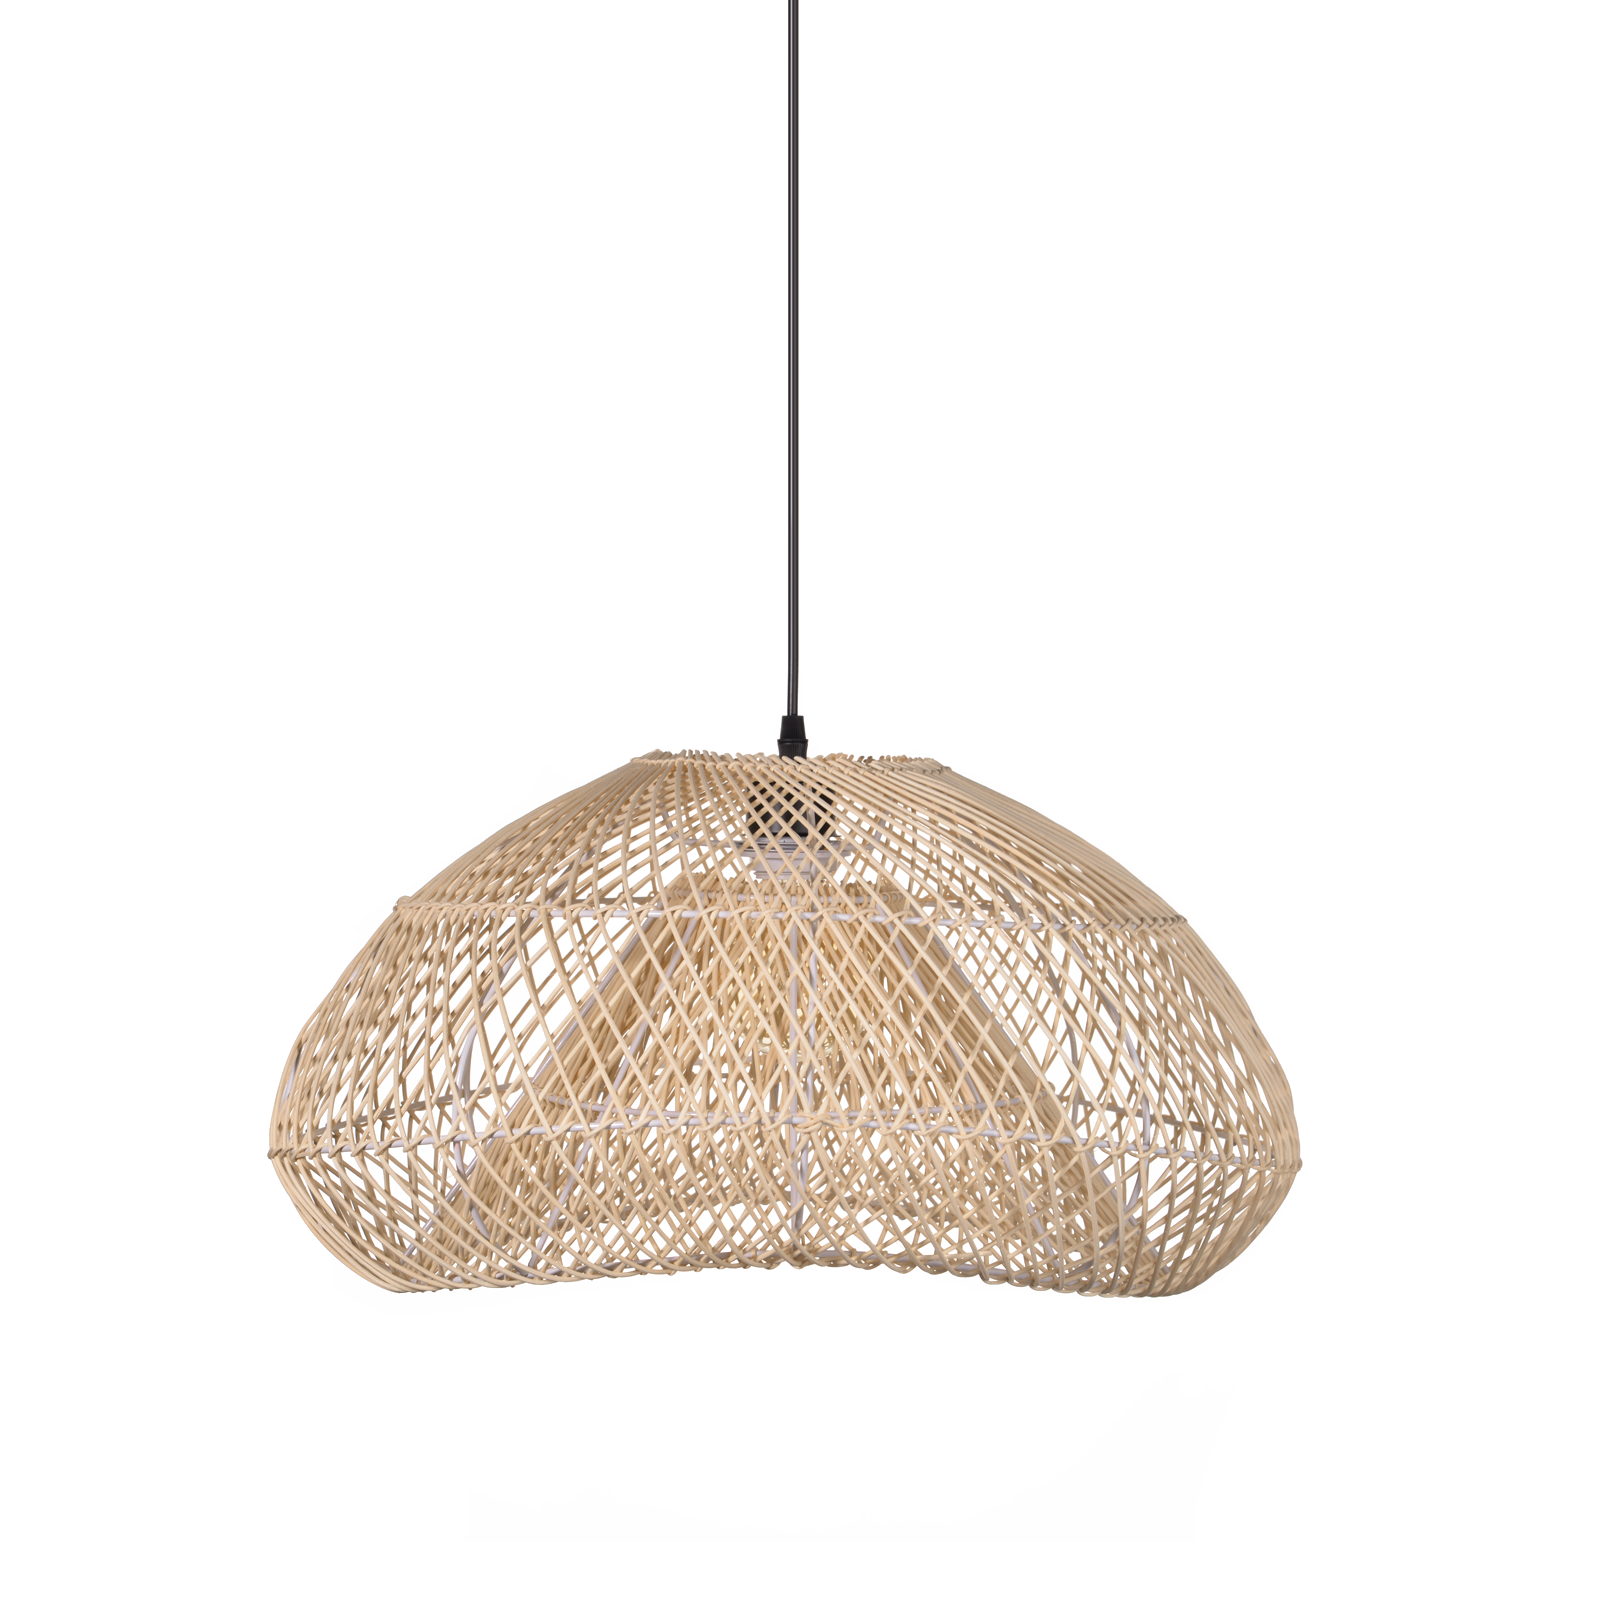 Handmade Bamboo Wicker Lampshade Vintage Rattan Pendant Light